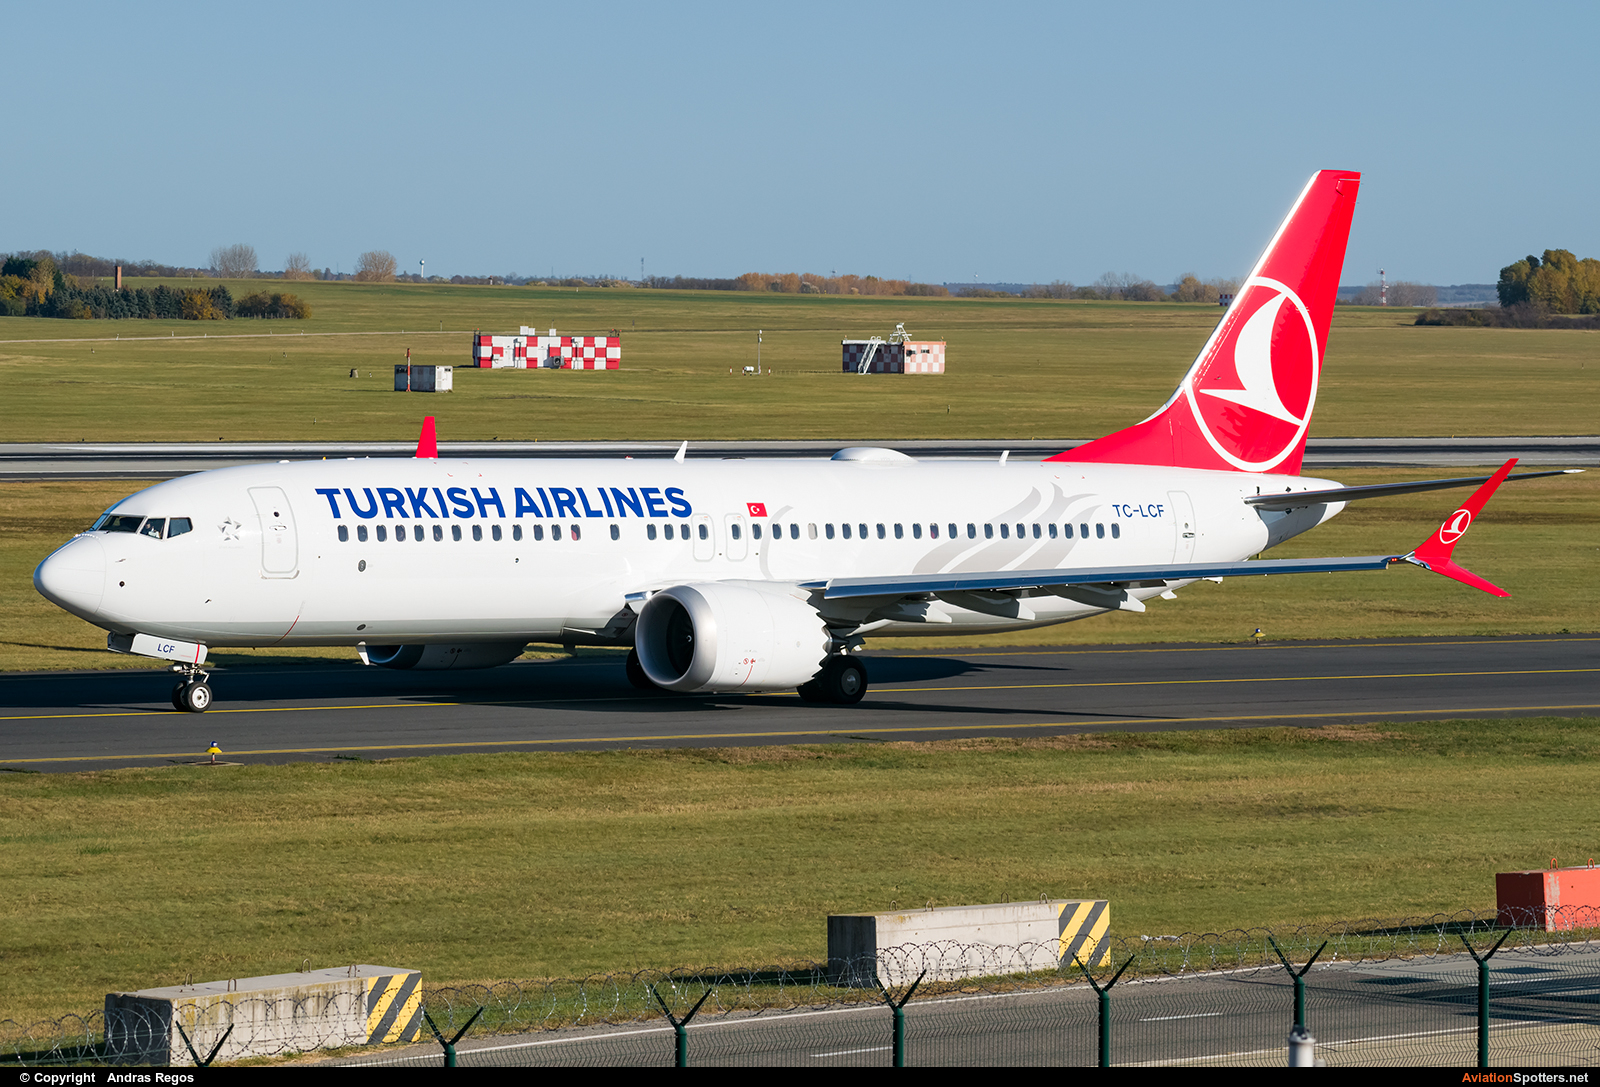 Turkish Airlines  -  737 MAX 8  (TC-LCF) By Andras Regos (regos)